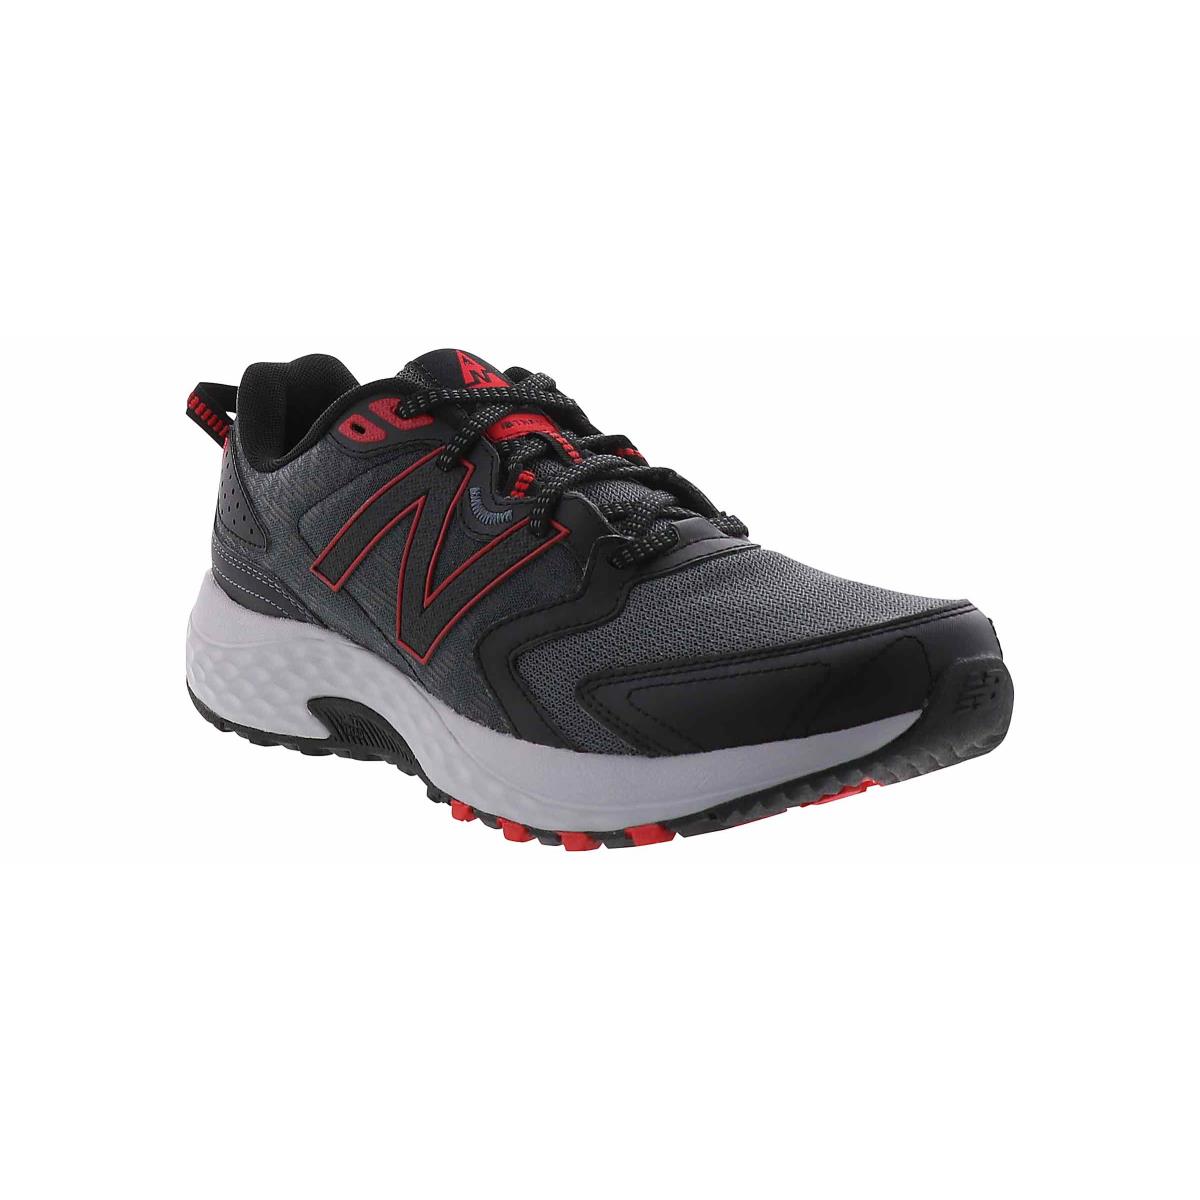 New Balance MT410 4E Wide-width Trail Runnin Shoe Black Black